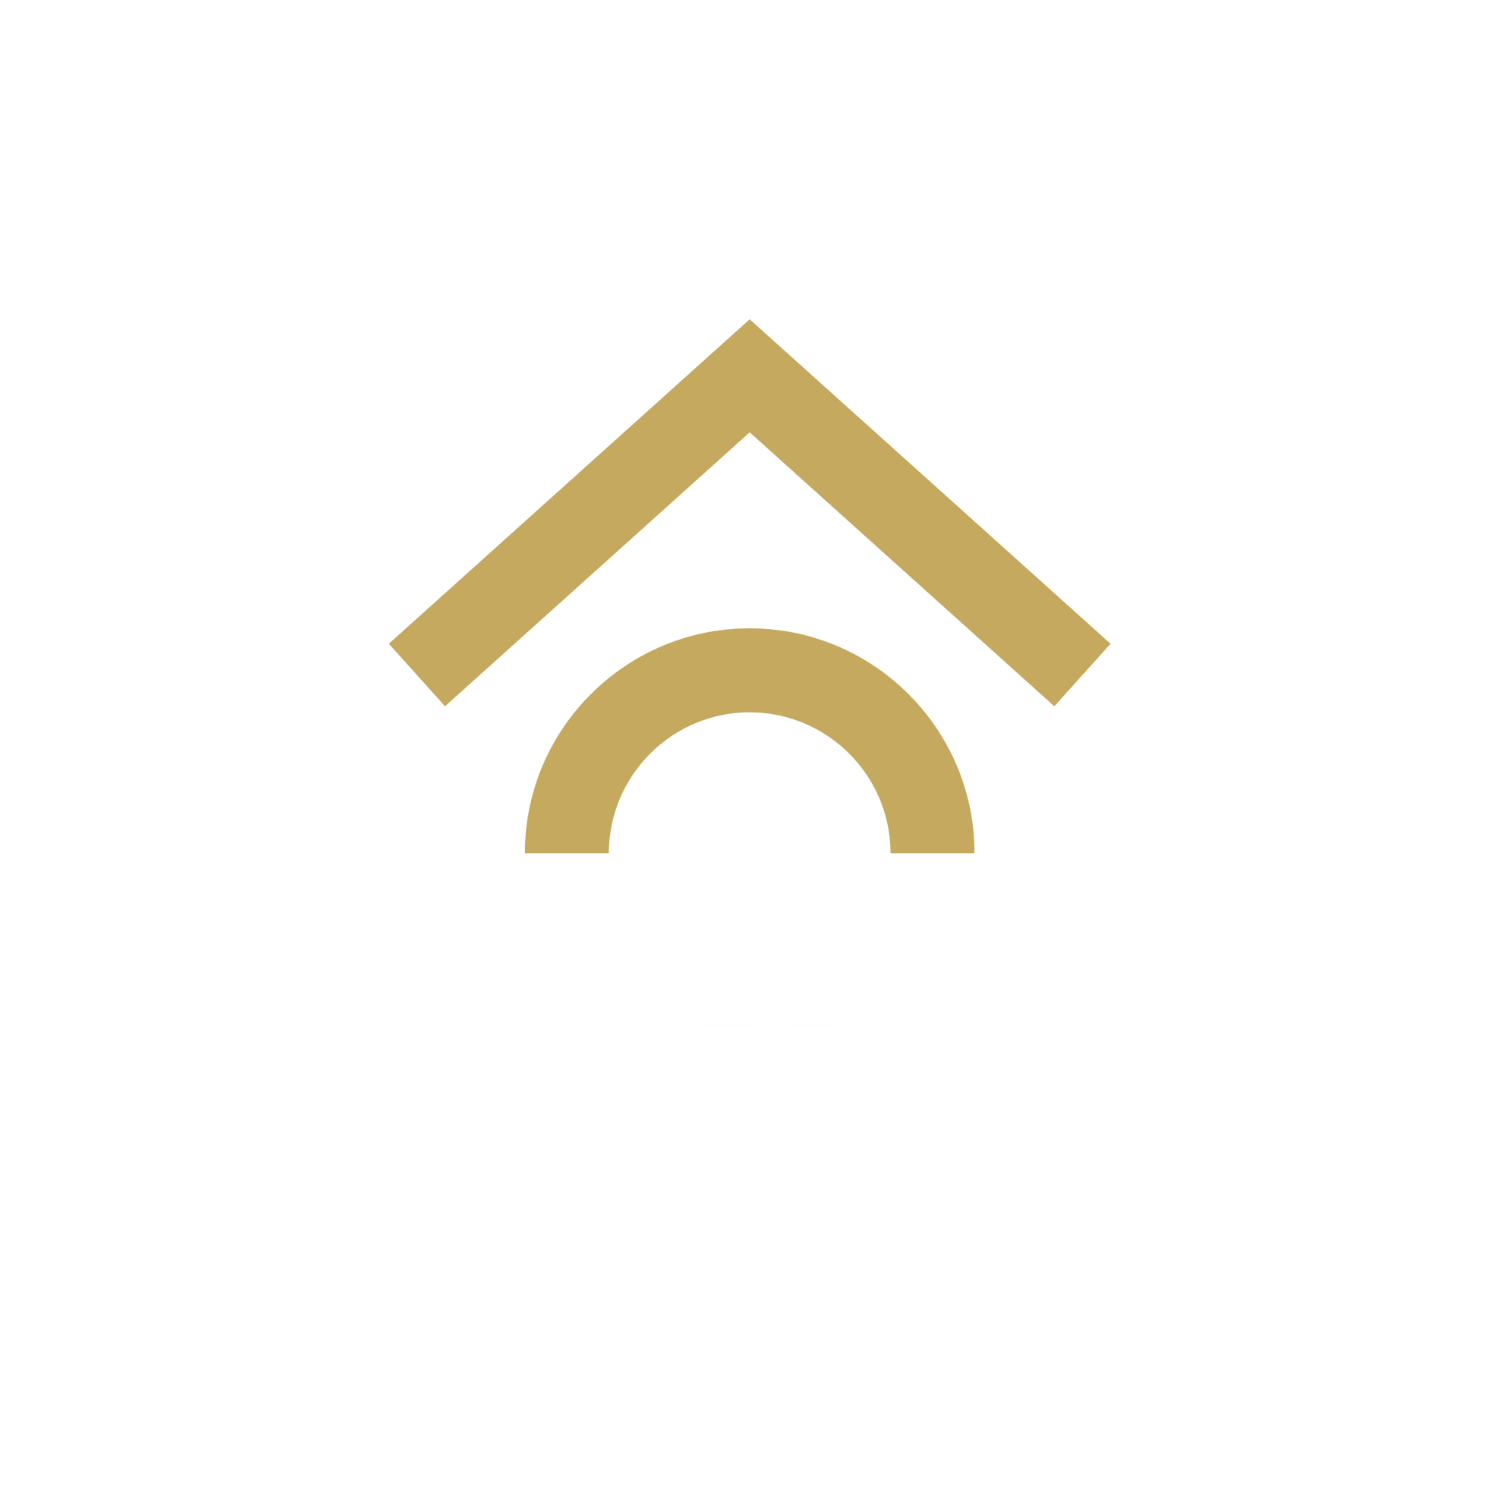 The Ovation Team